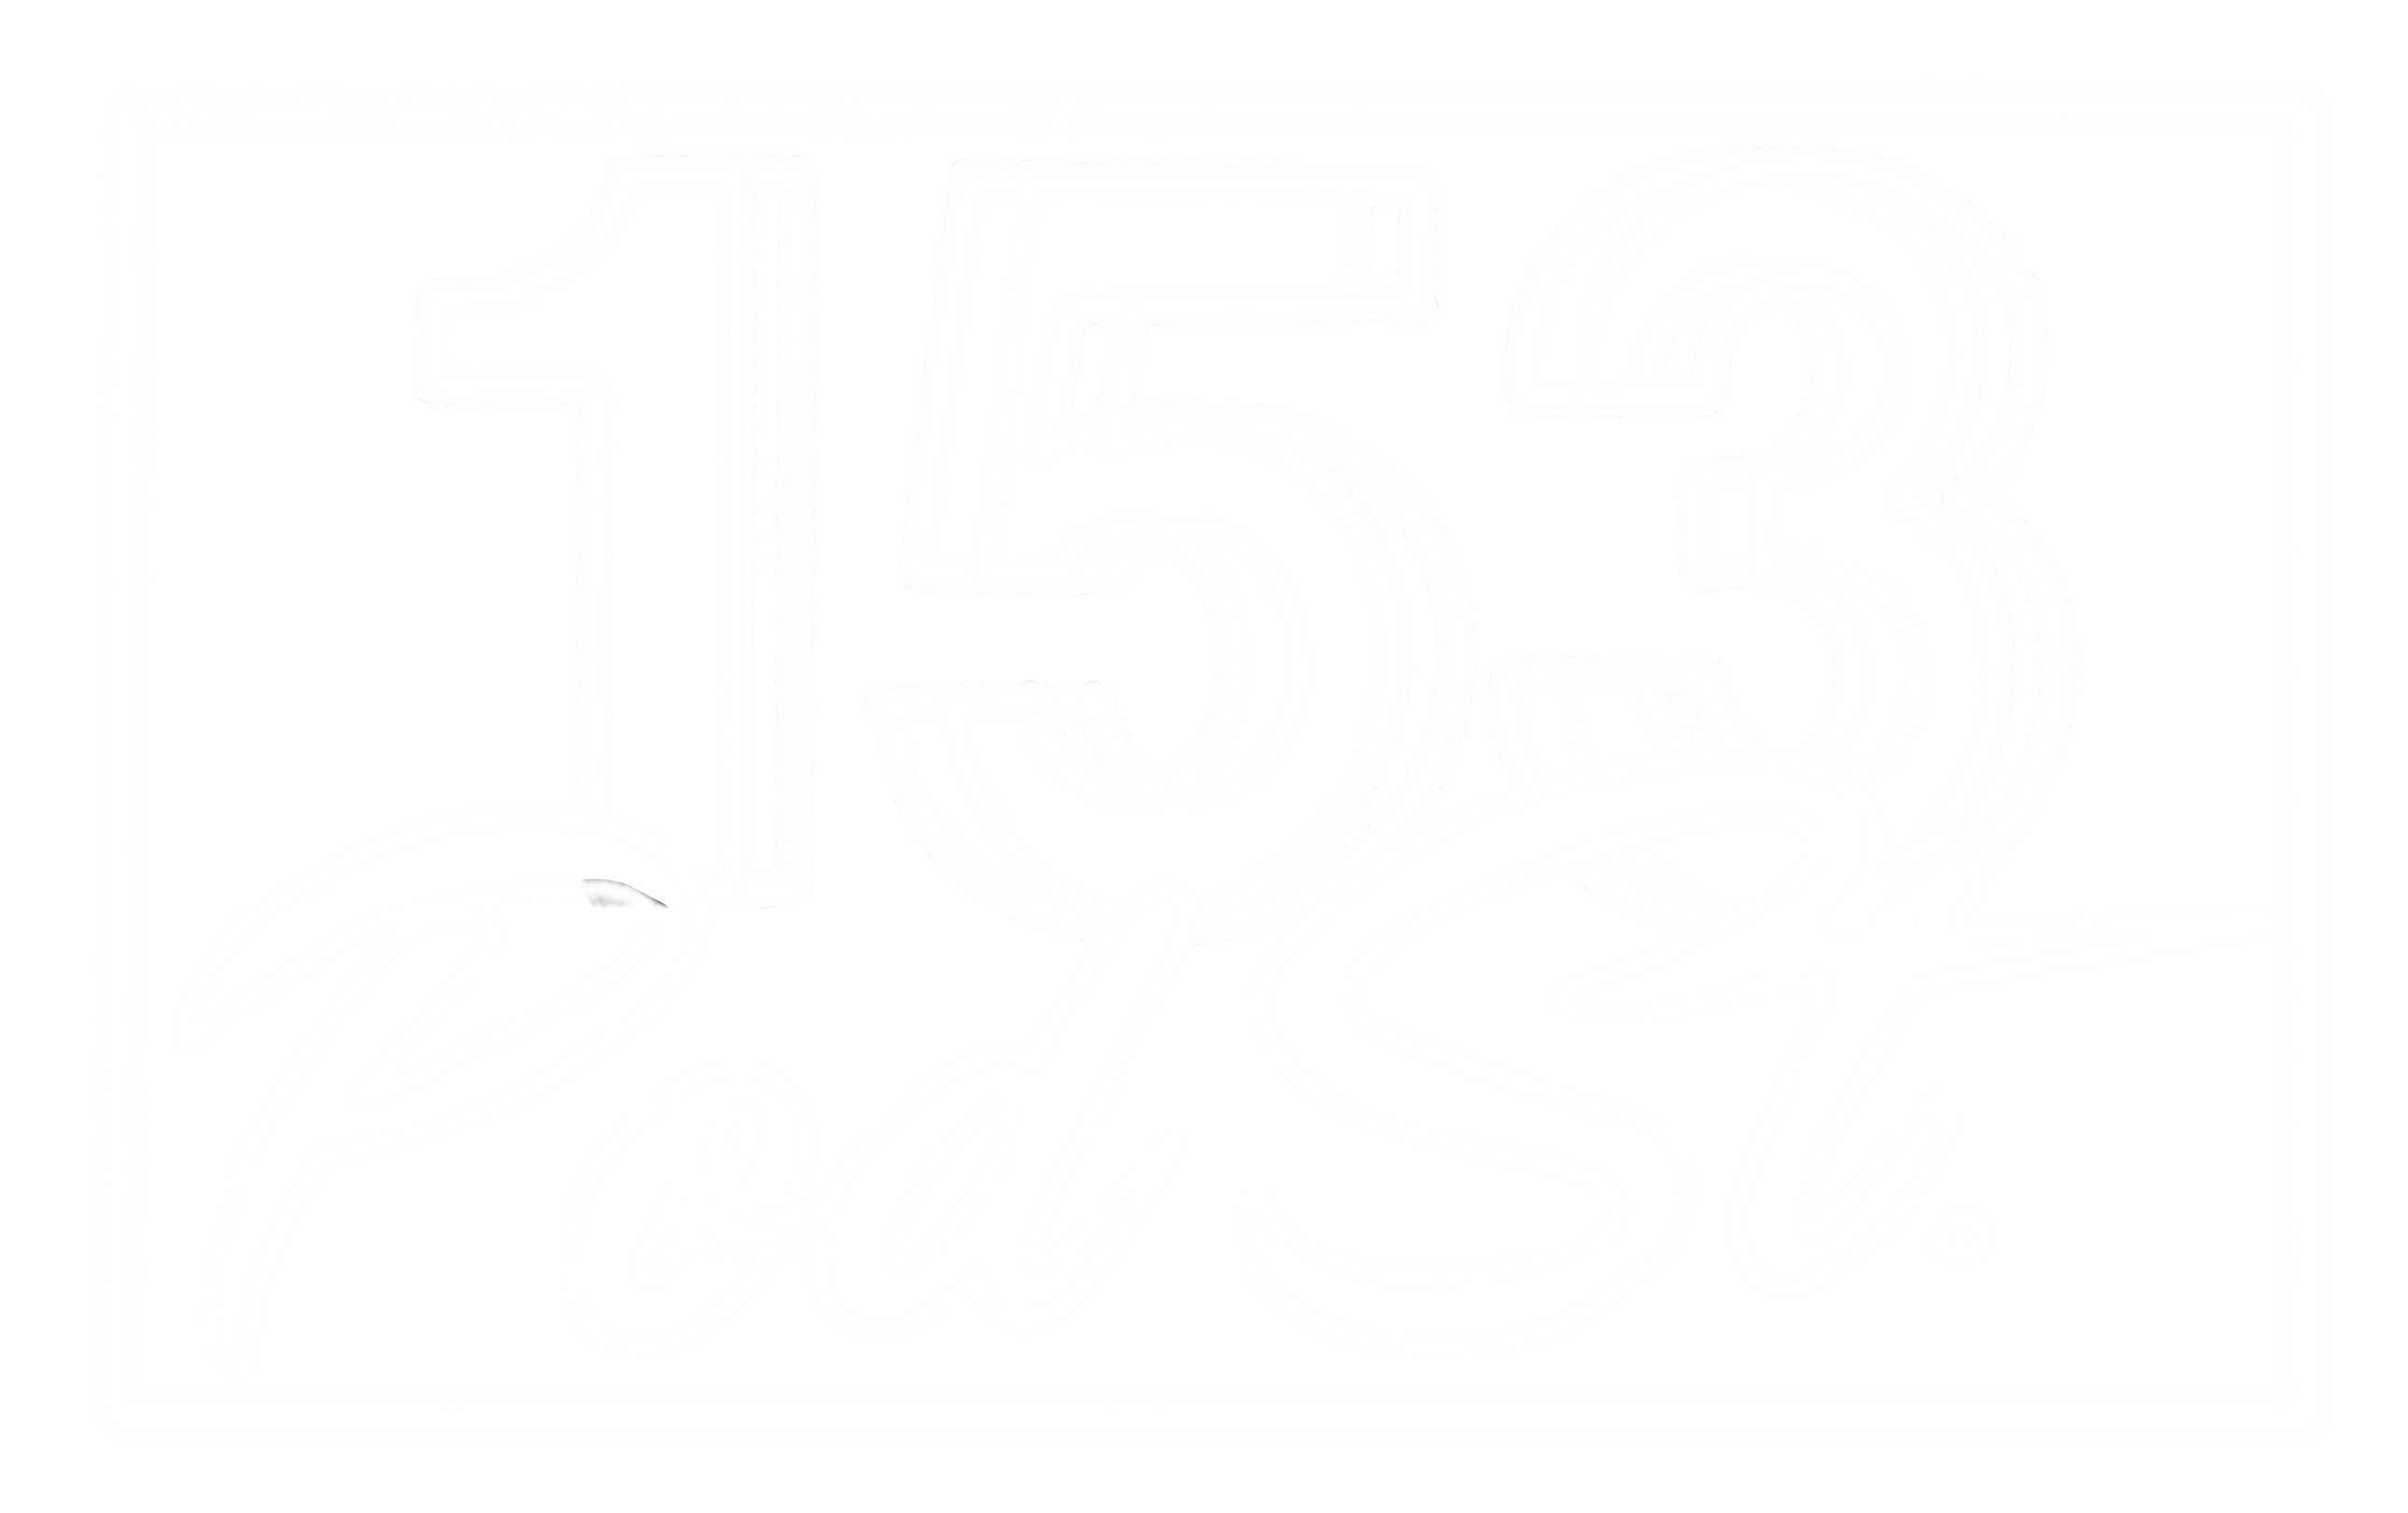 153 Pod Street